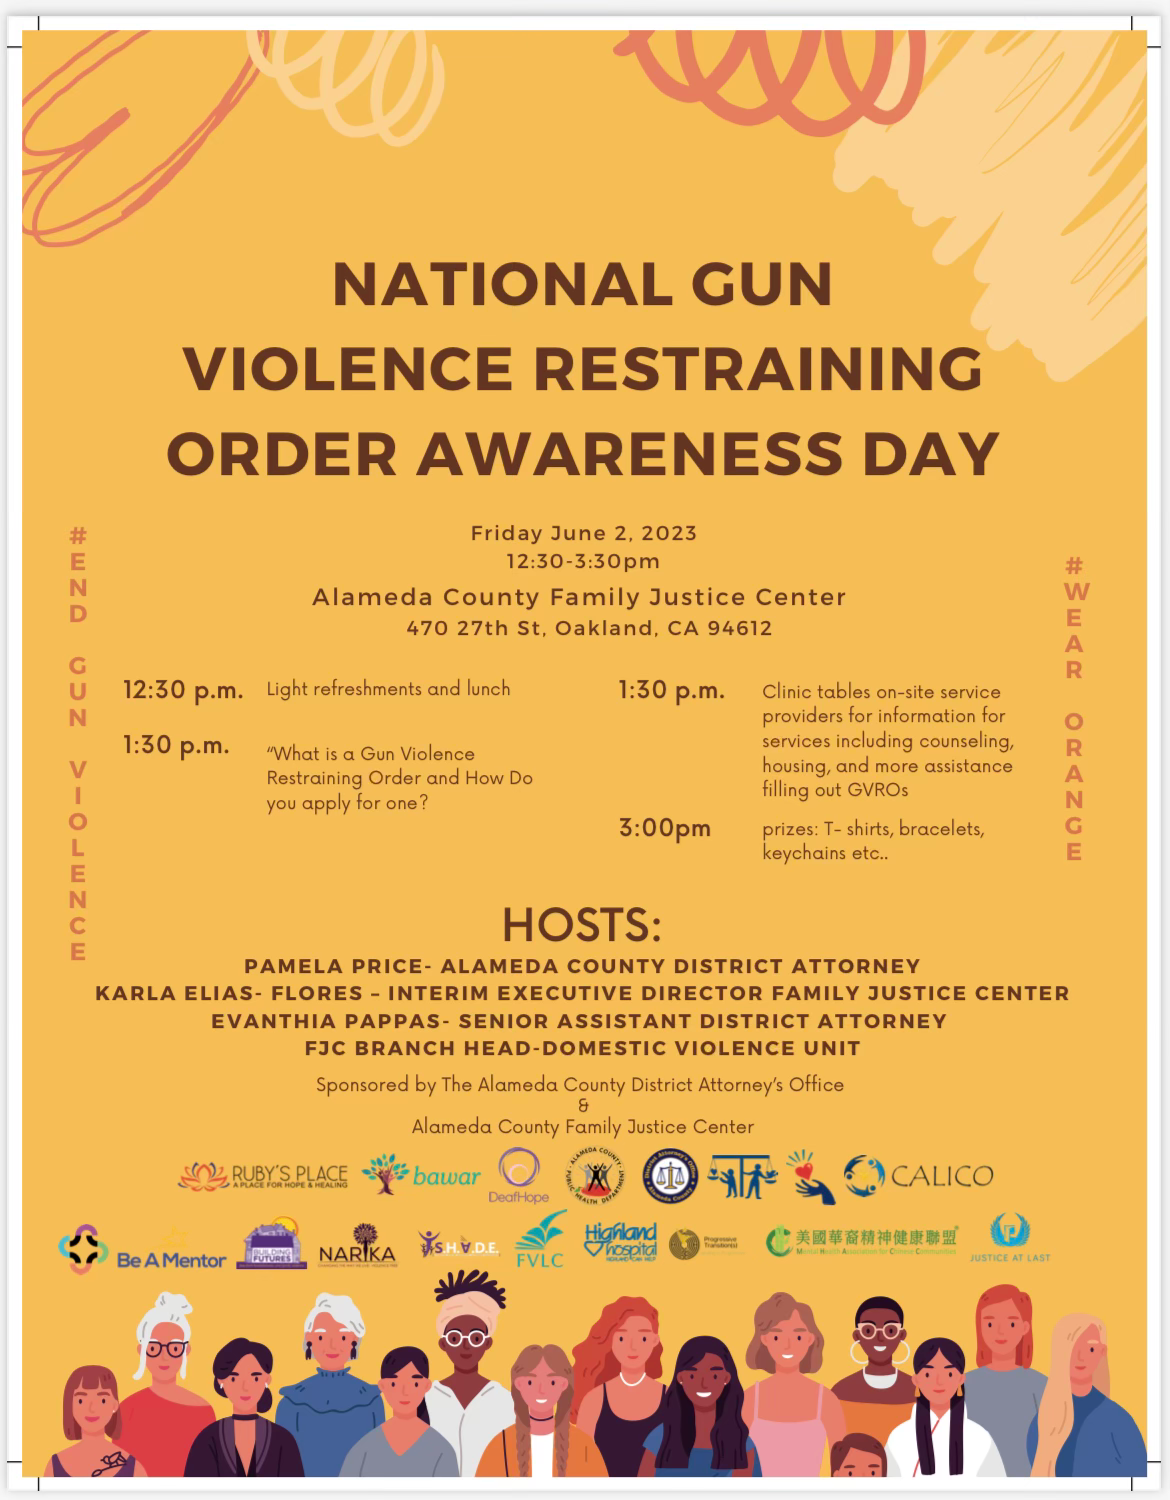 Agenda for the event - National Gun Violence Restraining Order Awareness Day